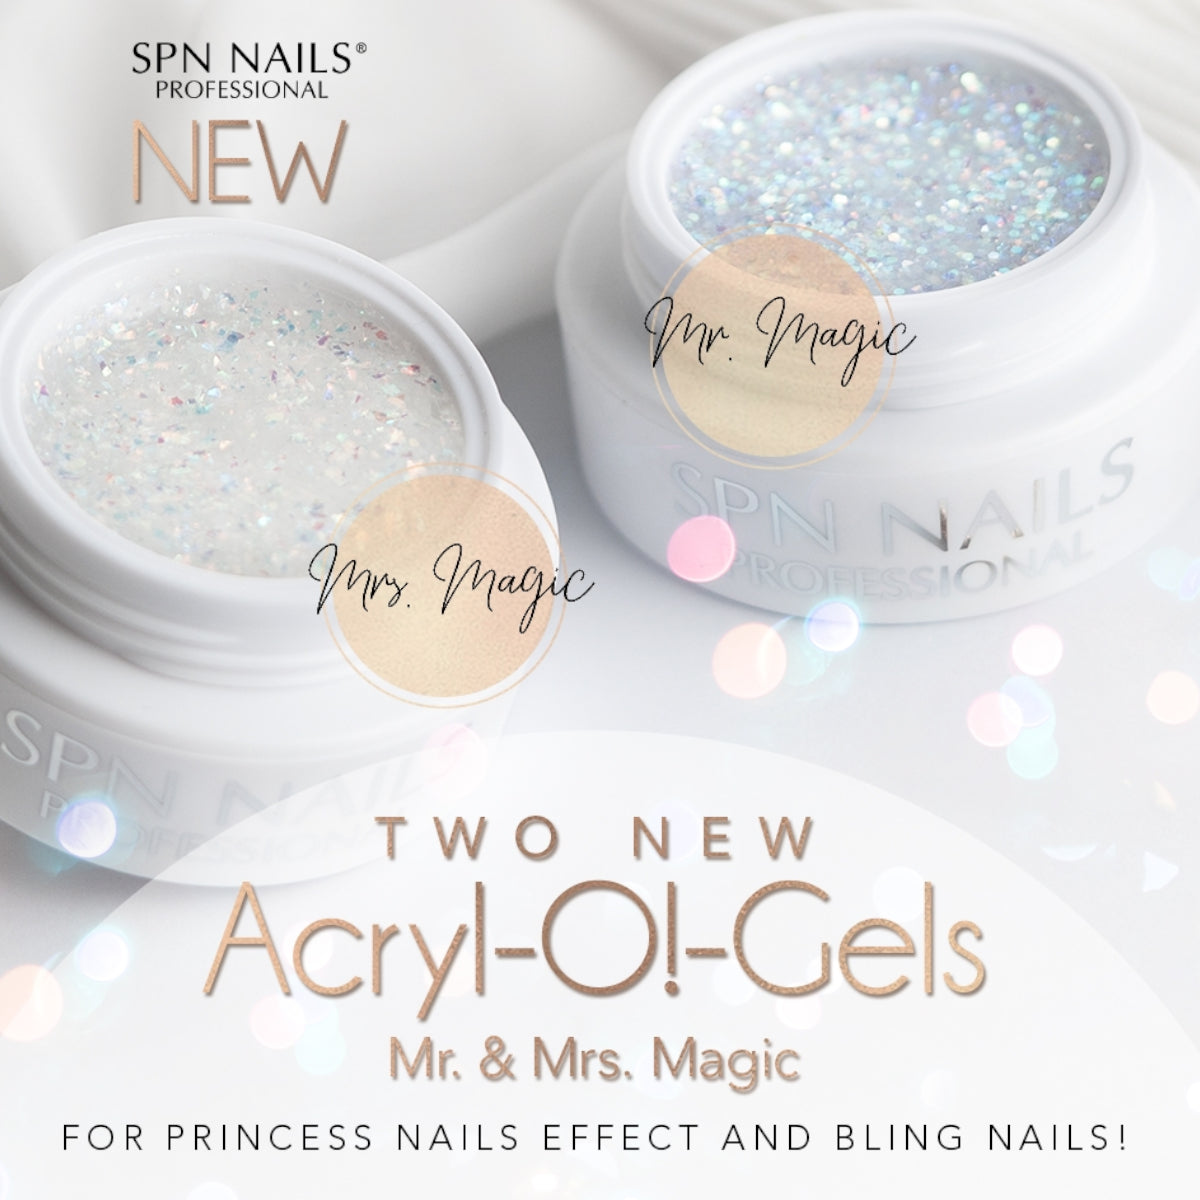 SPN Nails Acryl-O!-Gel Acrylic Gel Mrs. Magic Info